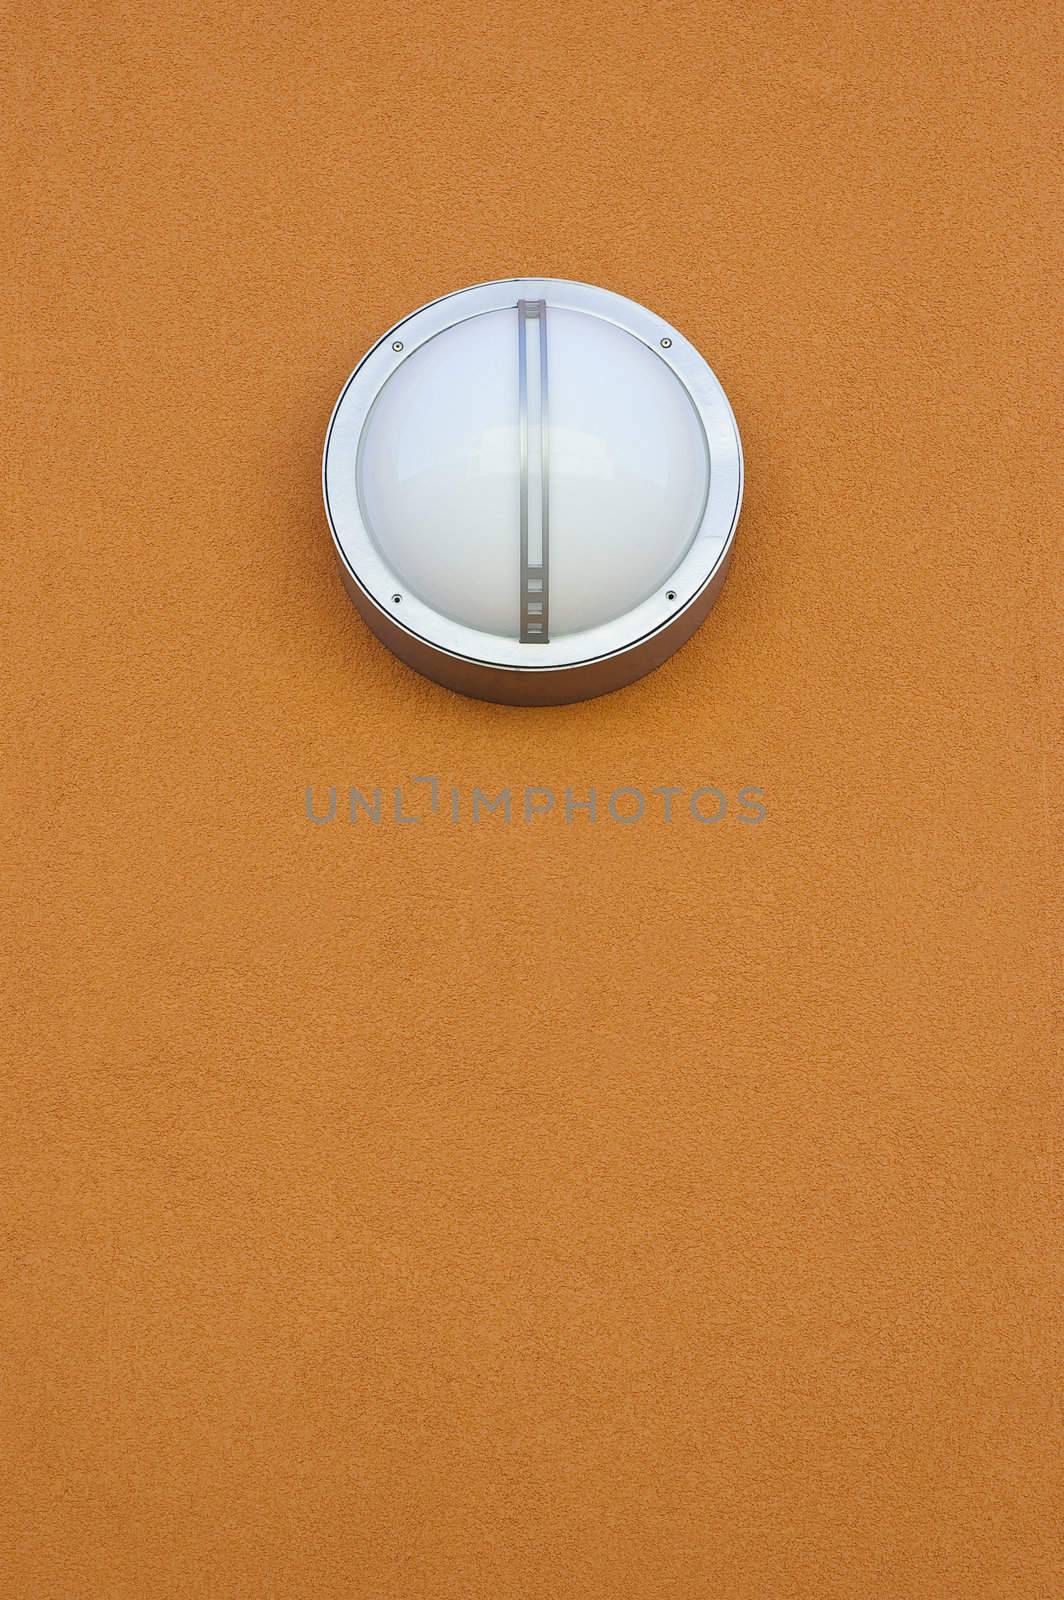 Round modern light fixture on orange stucco wall